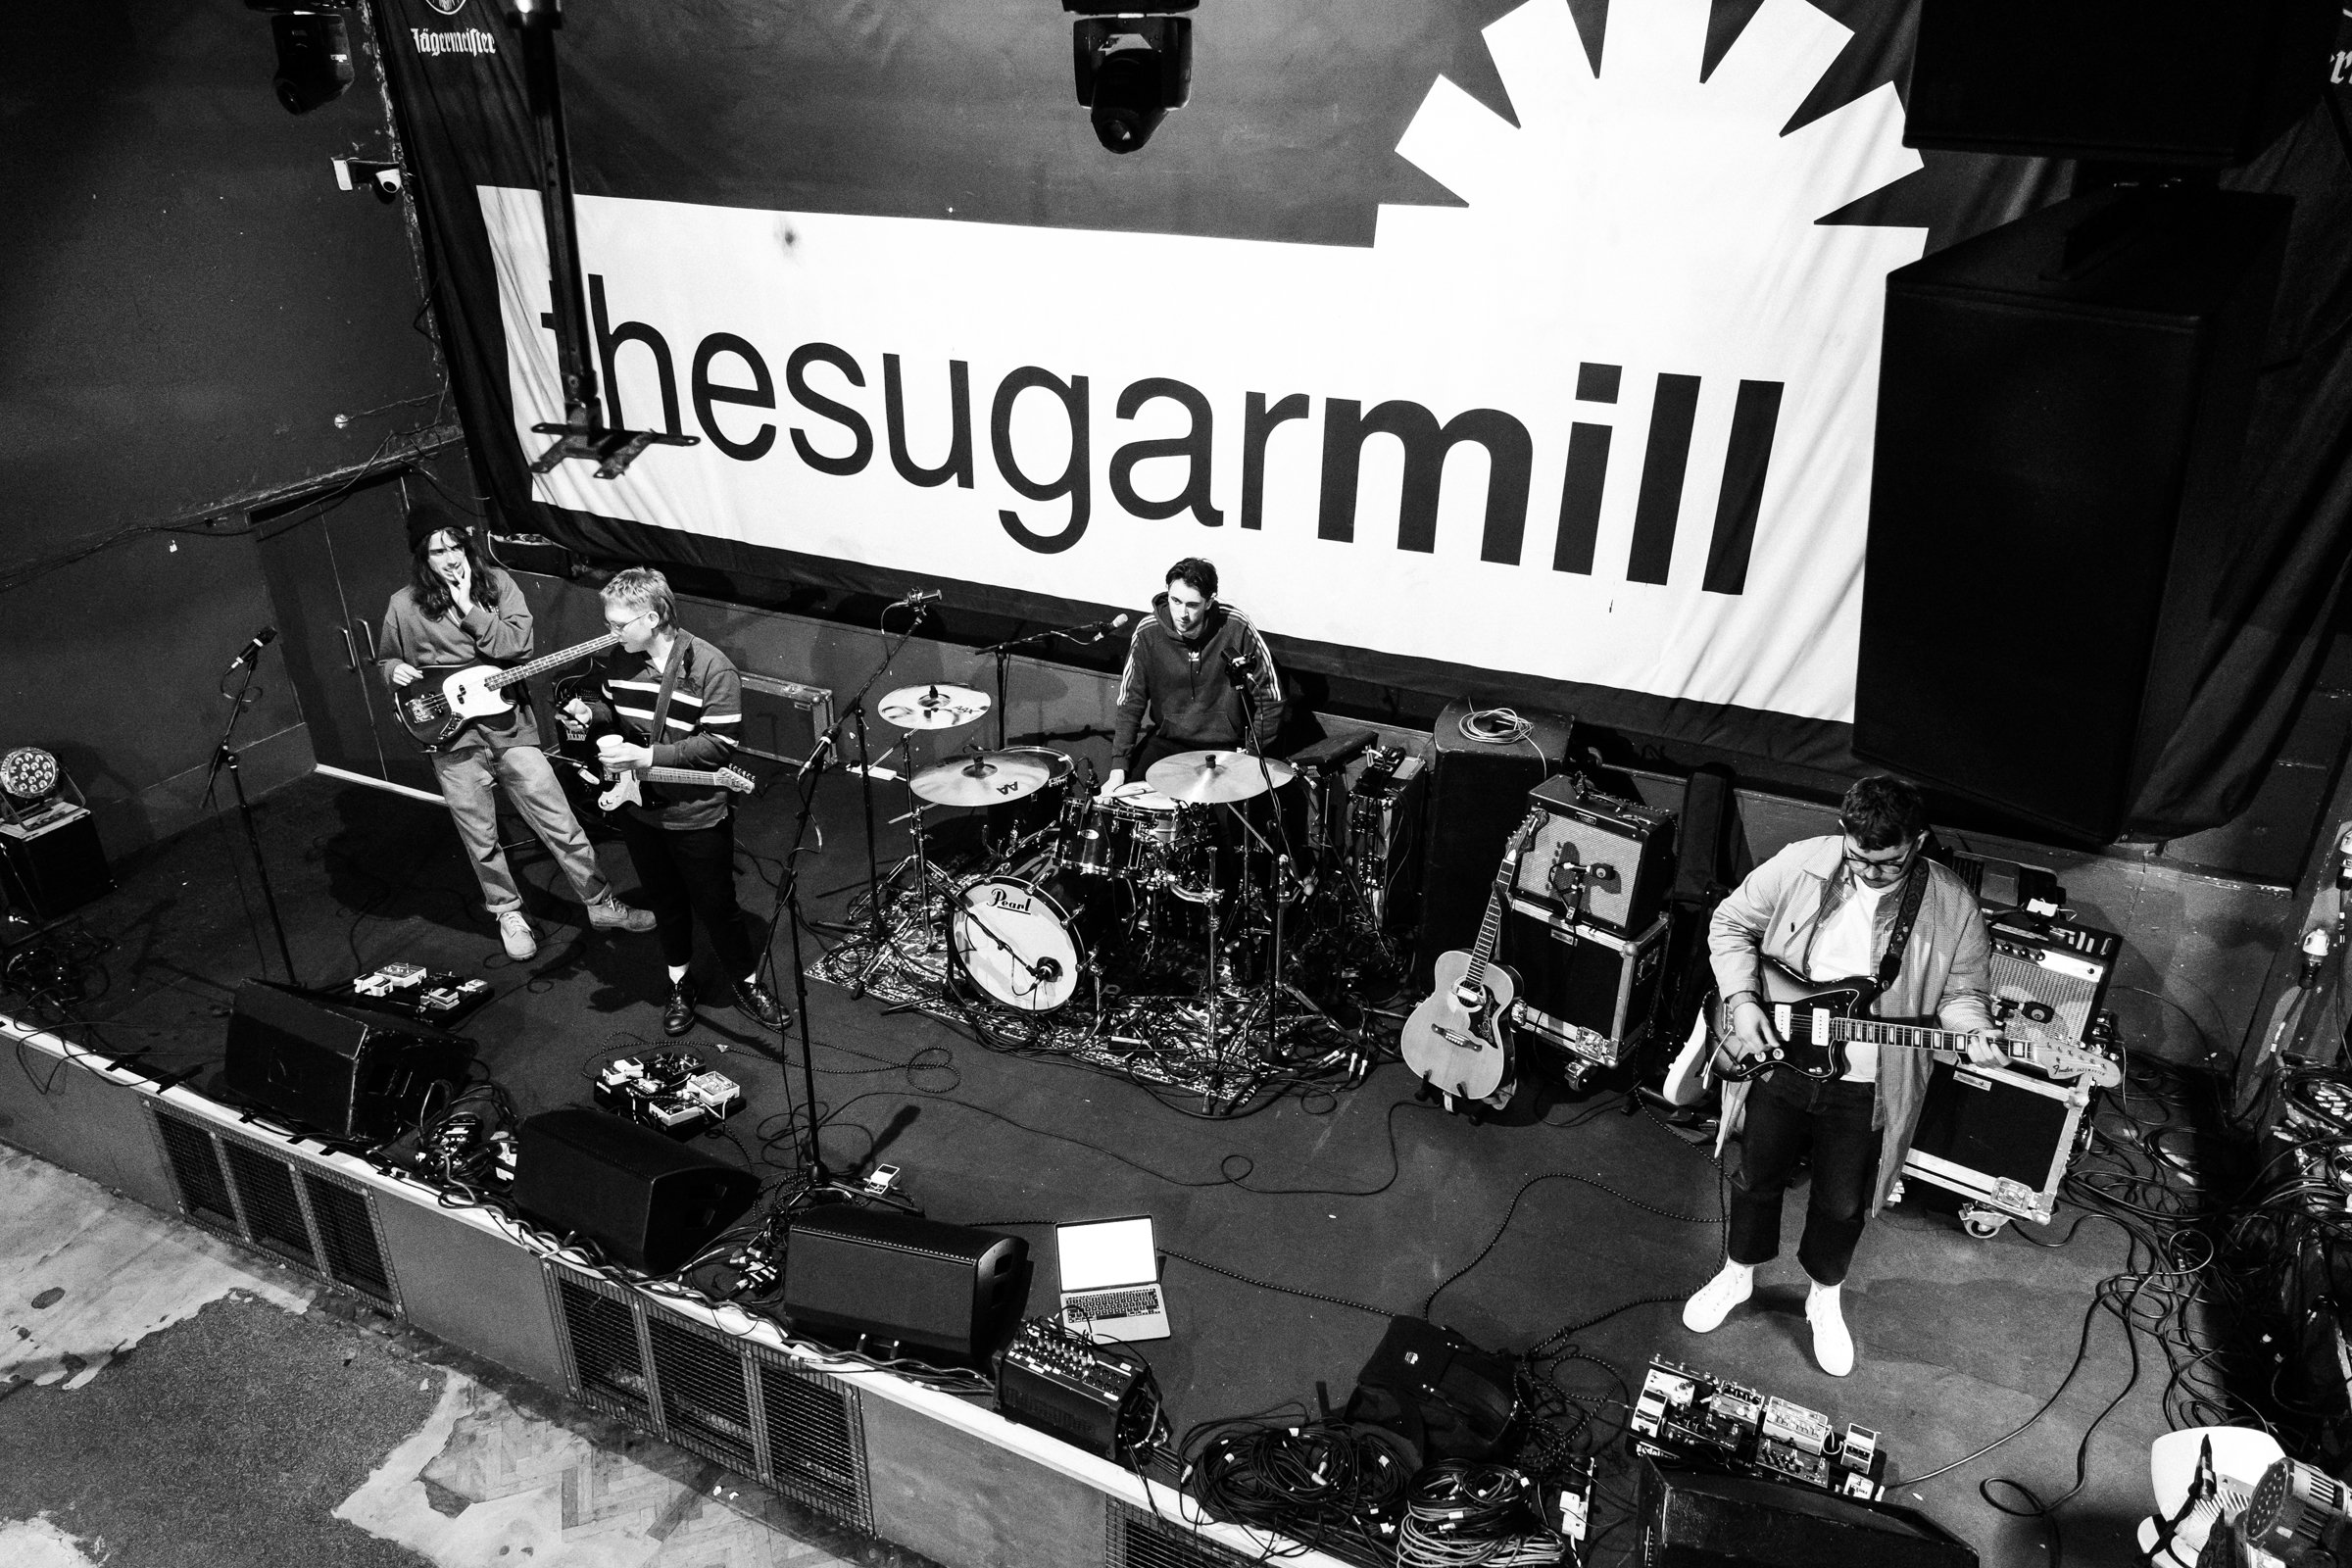  Show 10. Sugarmill, Stoke-on-Trent, England. 